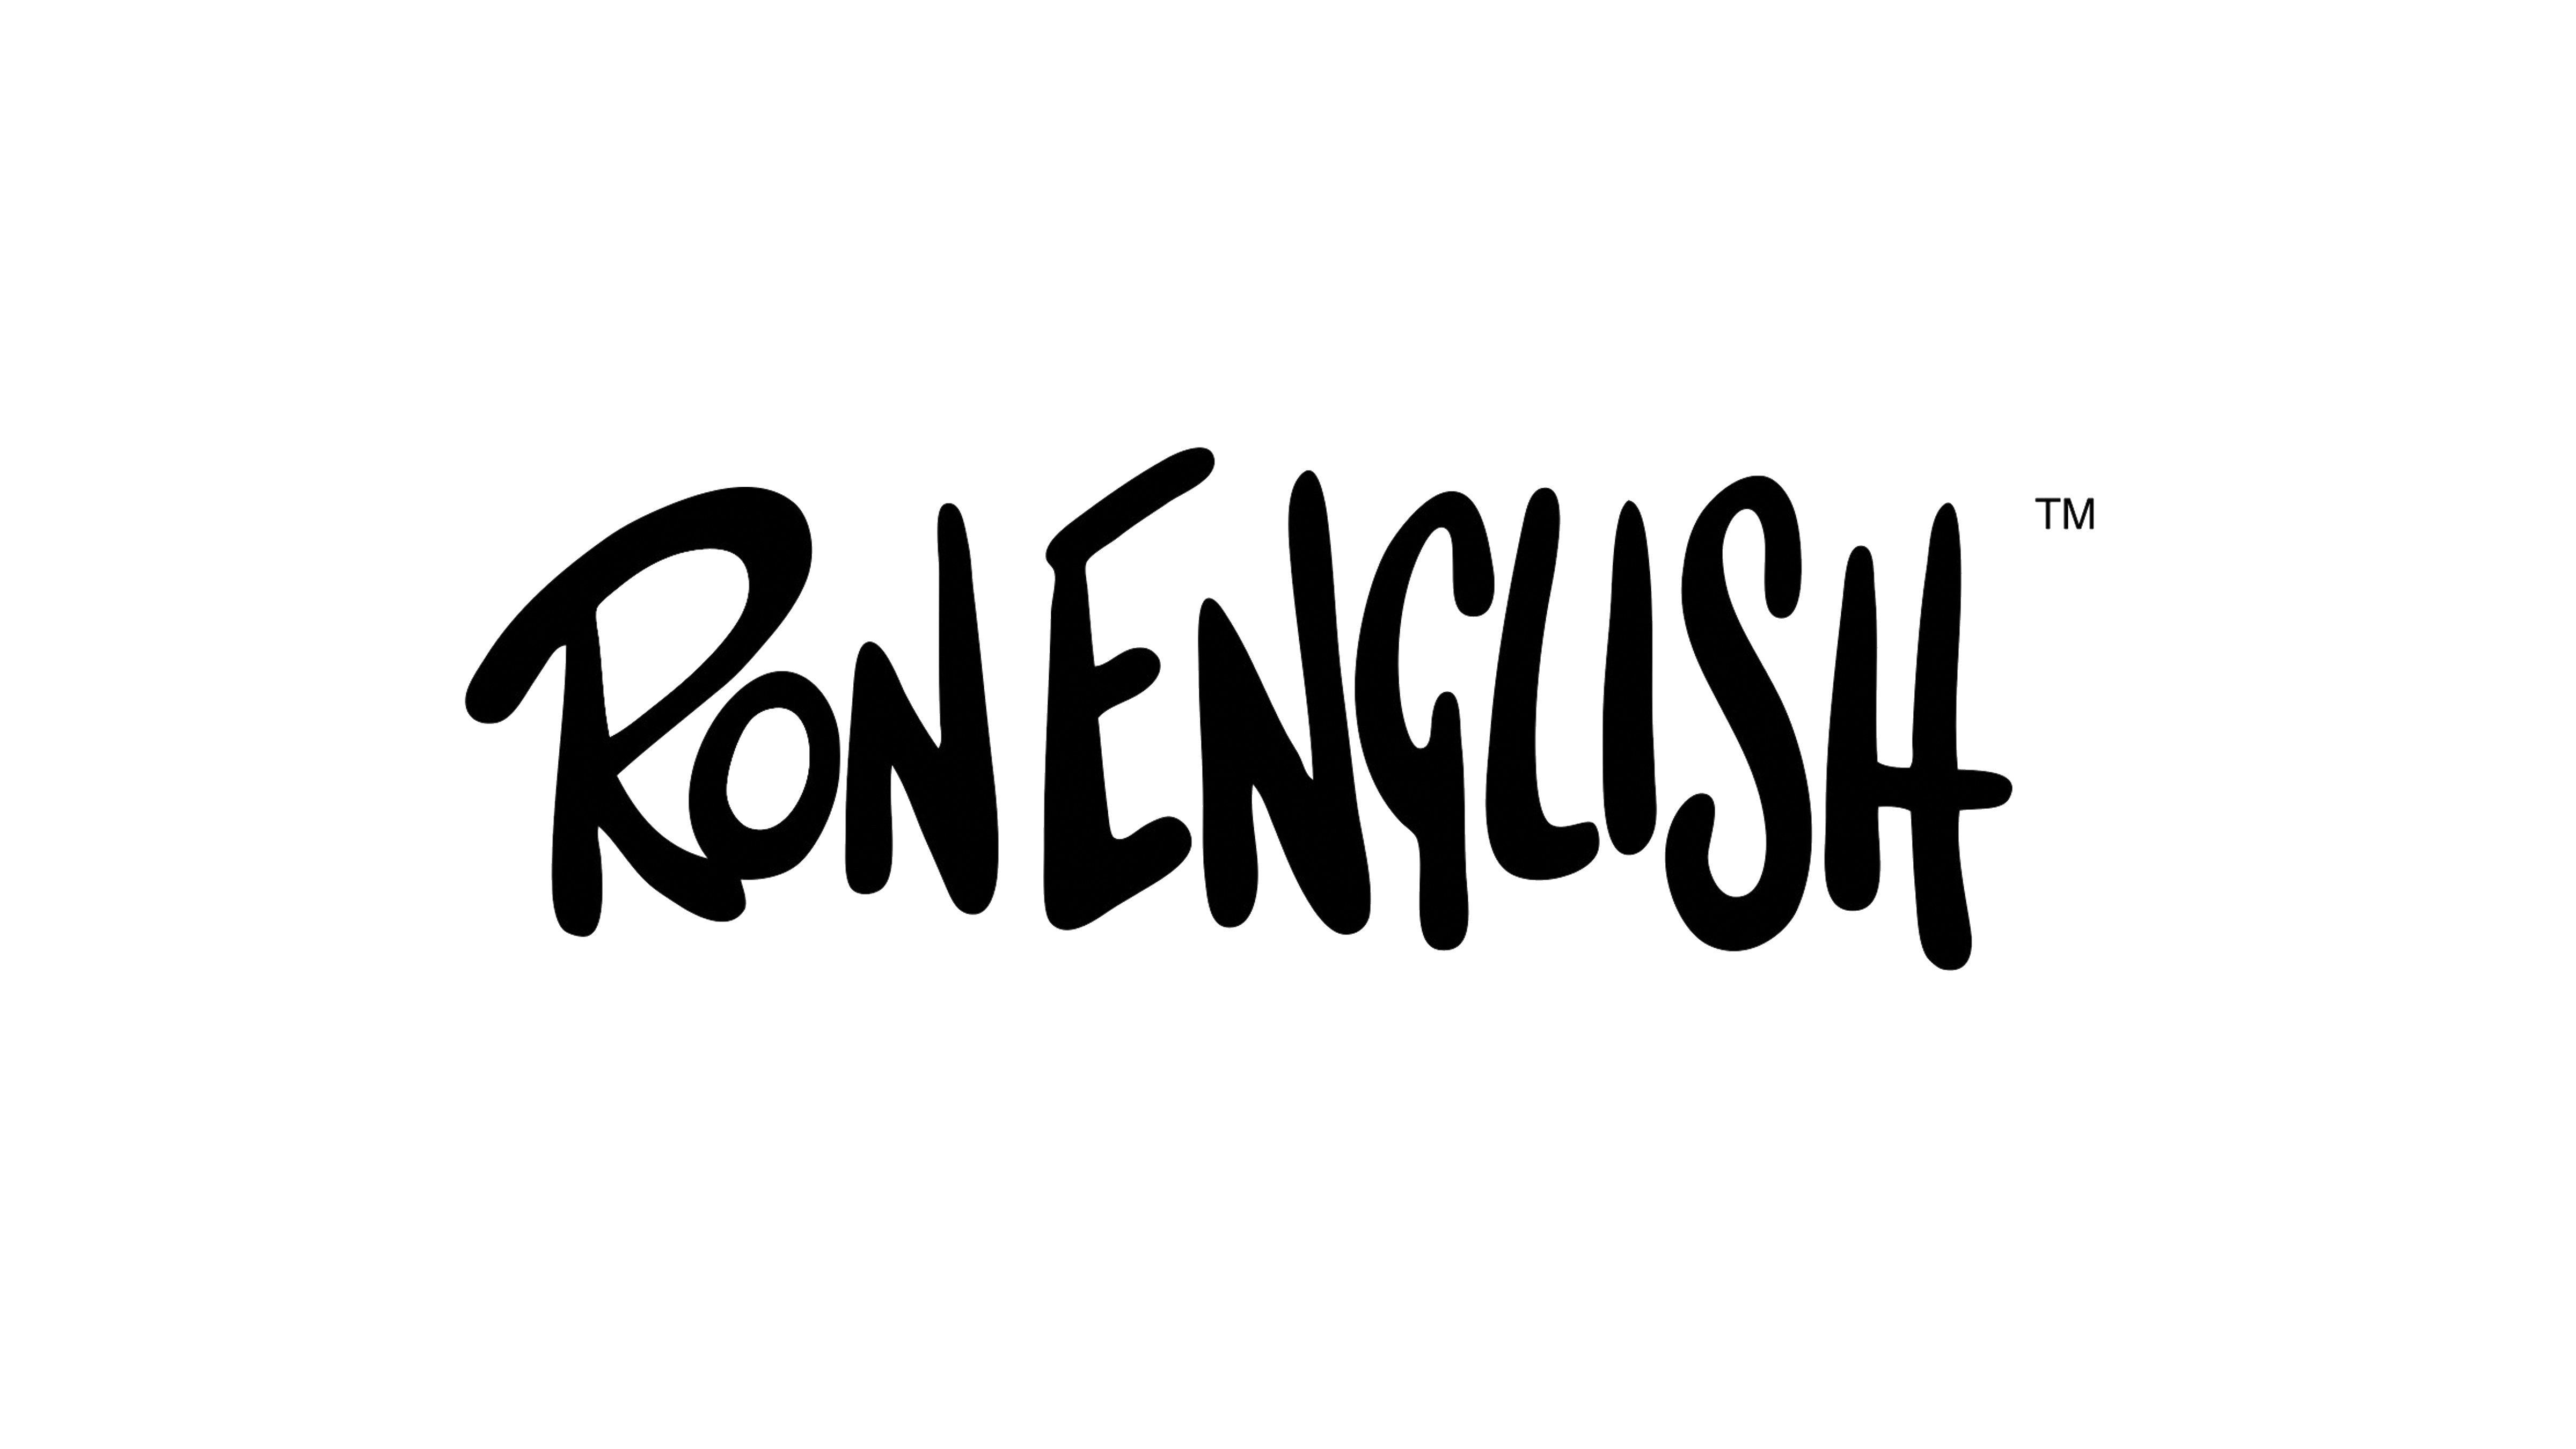 Ron English